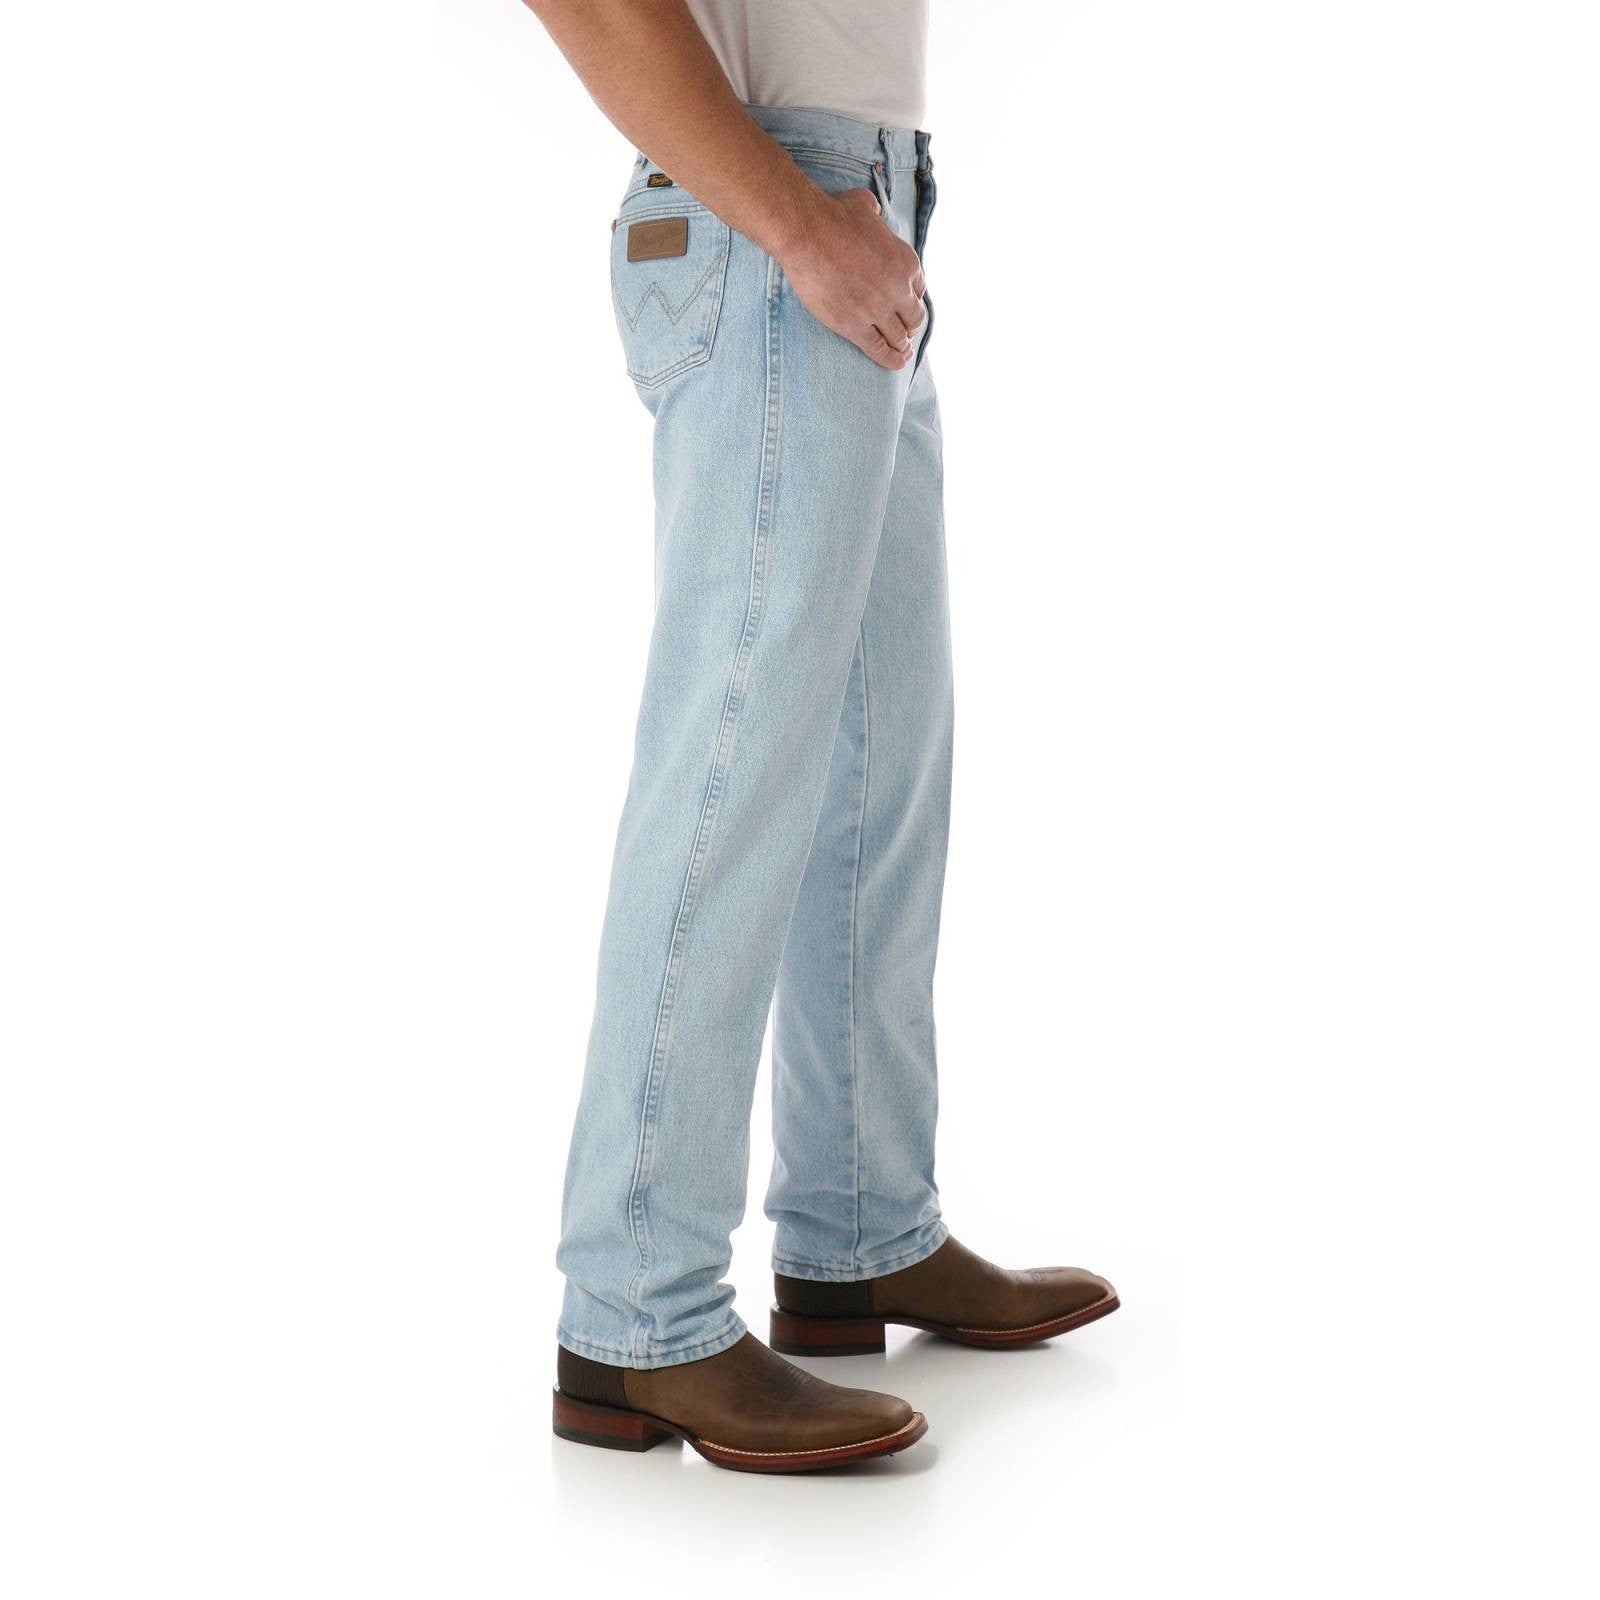 Wrangler Cowboy CutÂ® Men's Advance Comfort Stone Bleach Jeans